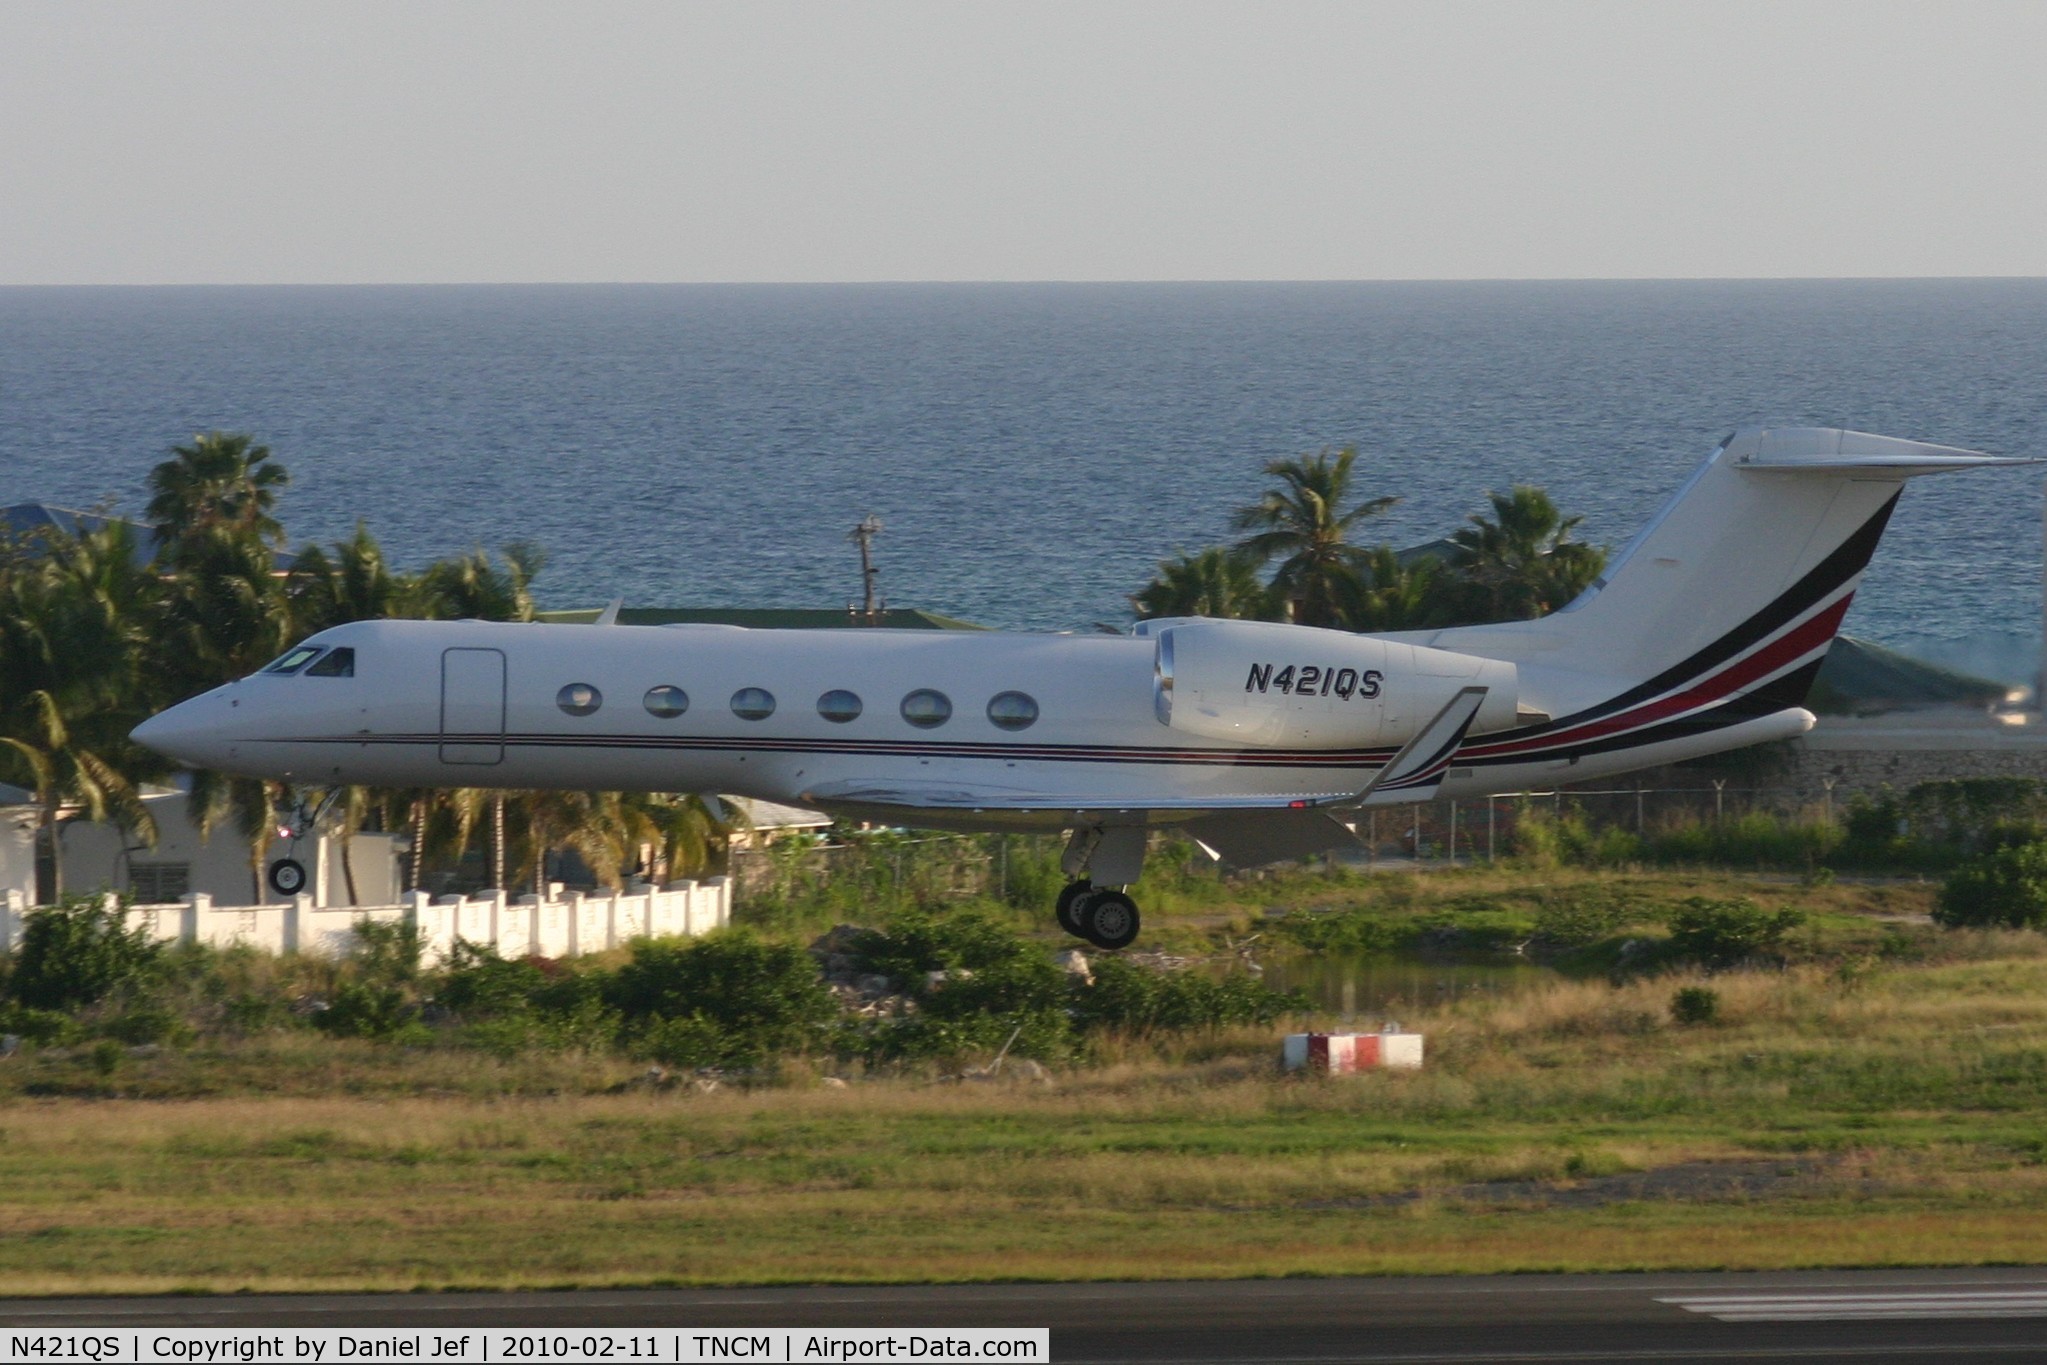 N421QS, 2008 Gulfstream Aerospace GIV-X (G450) C/N 4114, N421QS landing at TNCM runway 10